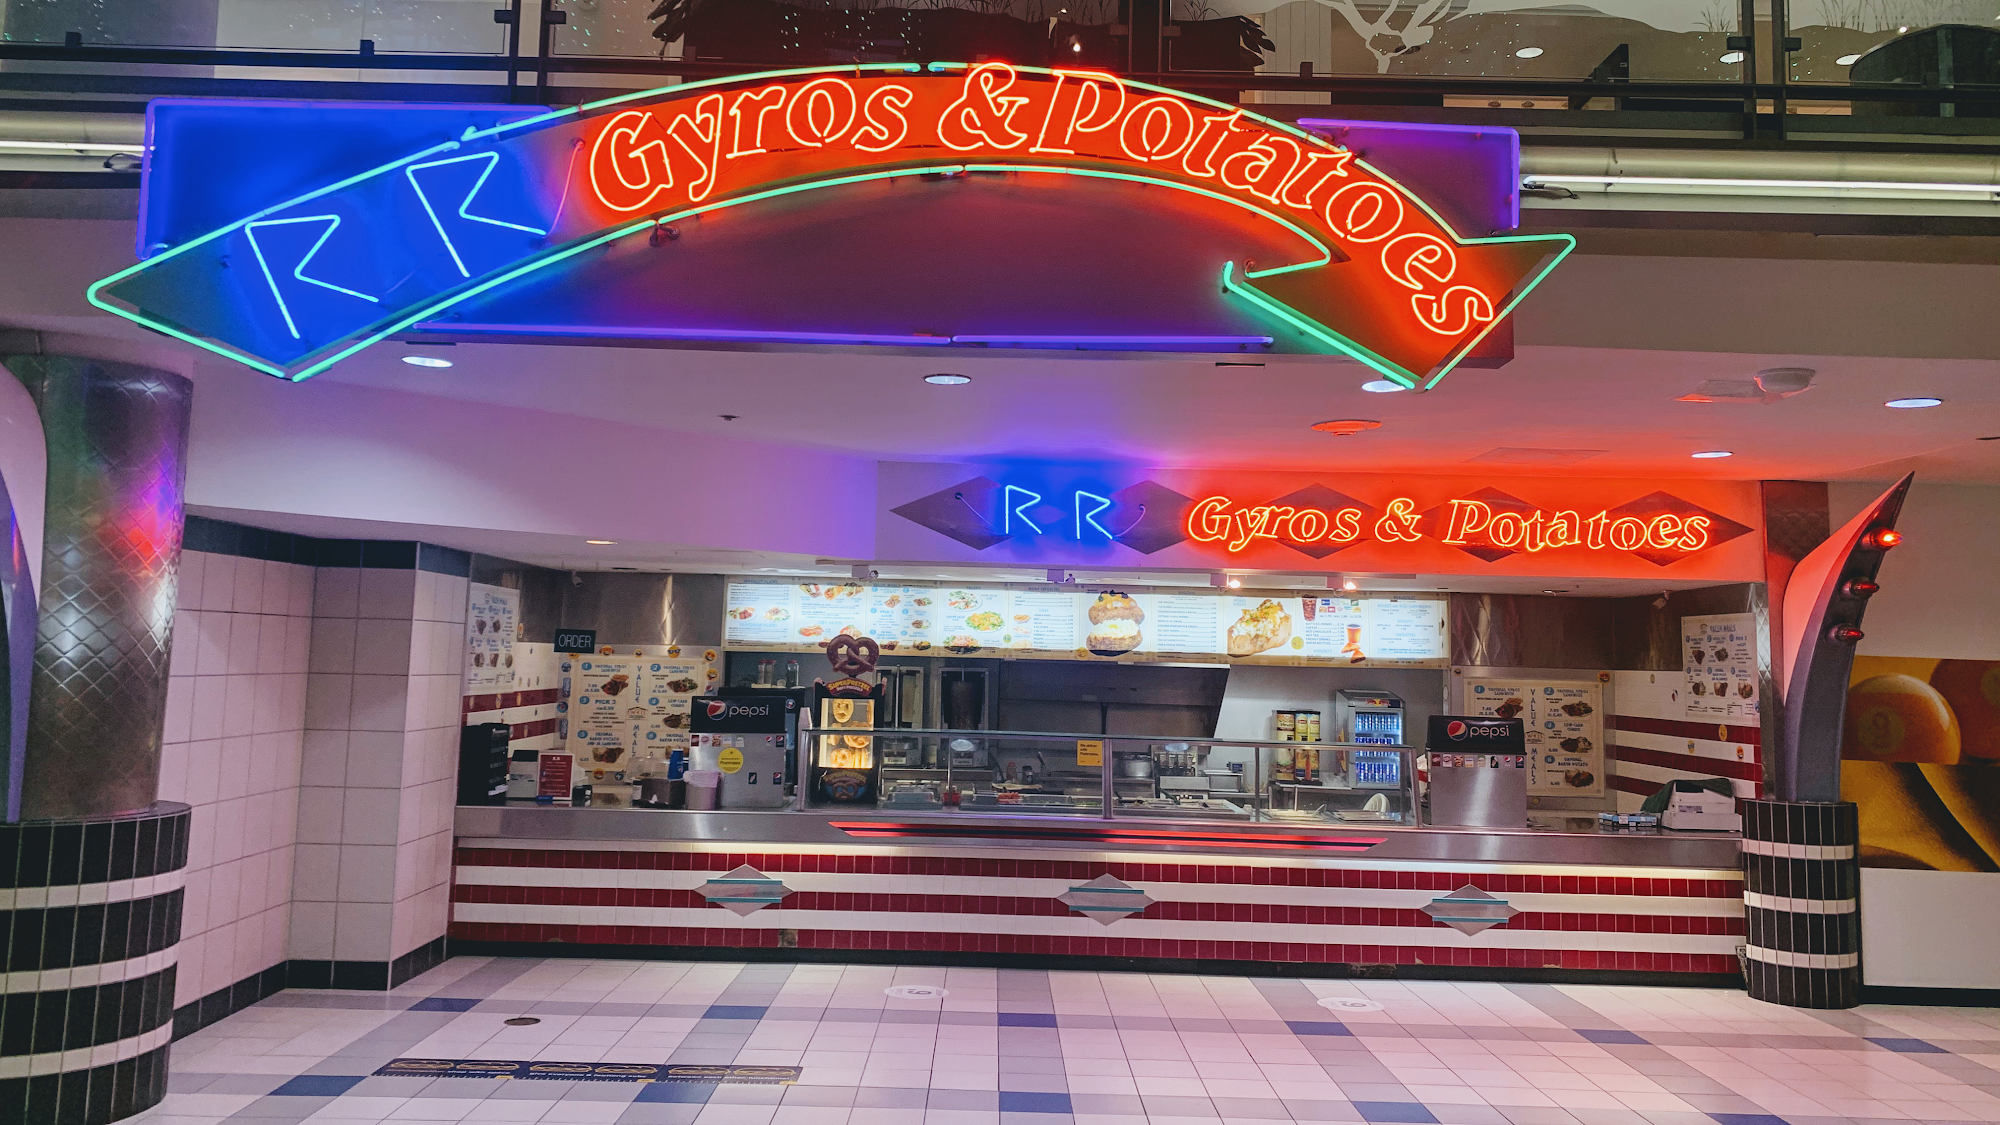 R.R Gyros & Potatoes